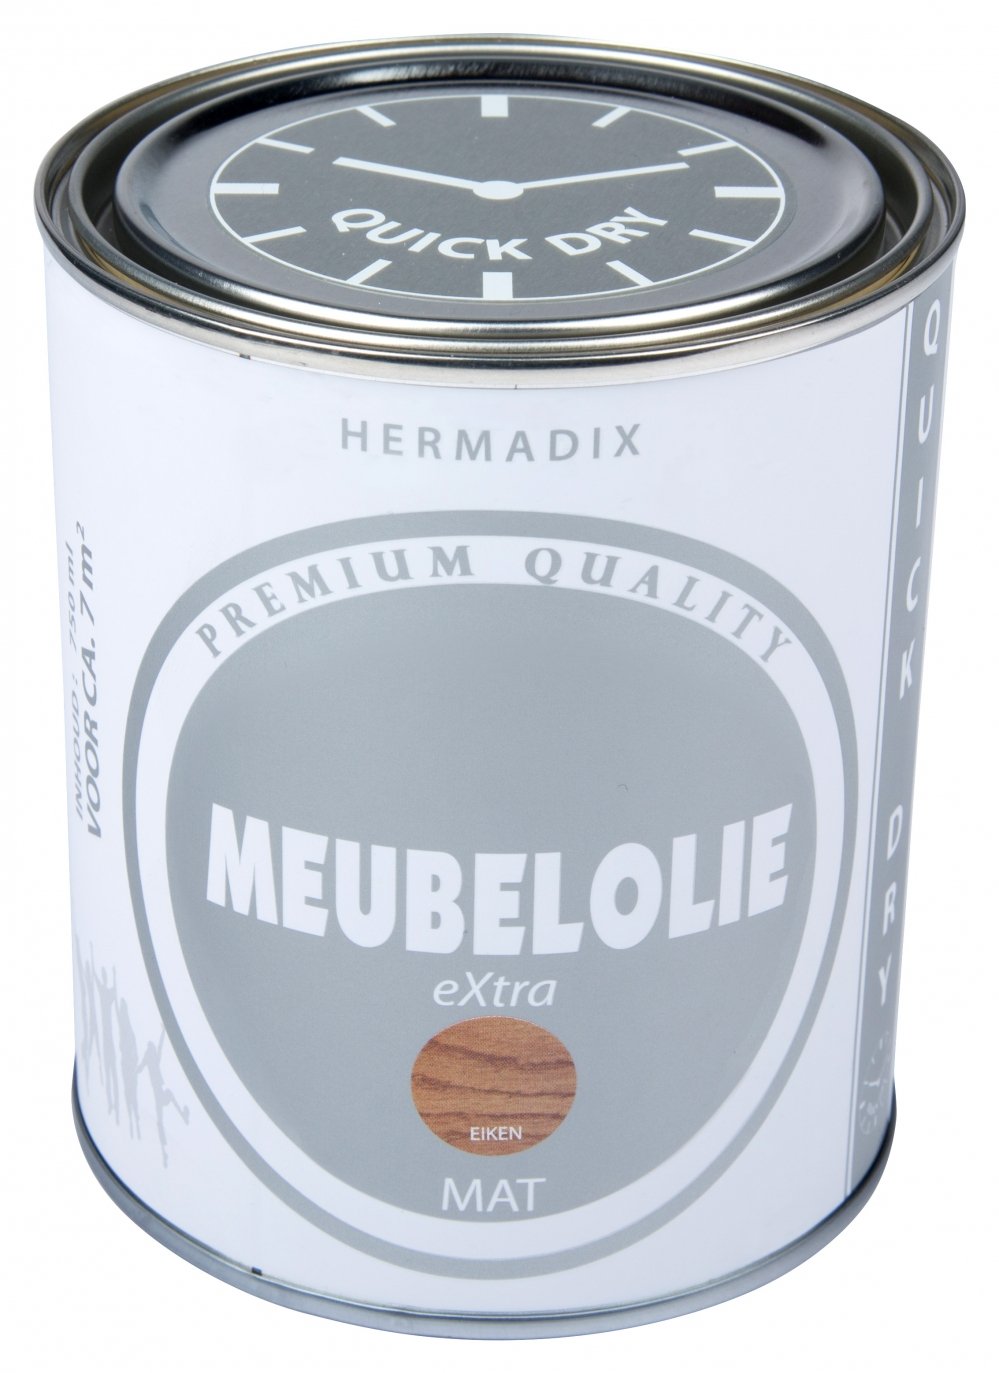 Hermadix - hermadix-meubellolie-extra-mat-eiken1-verfcompleet.nl